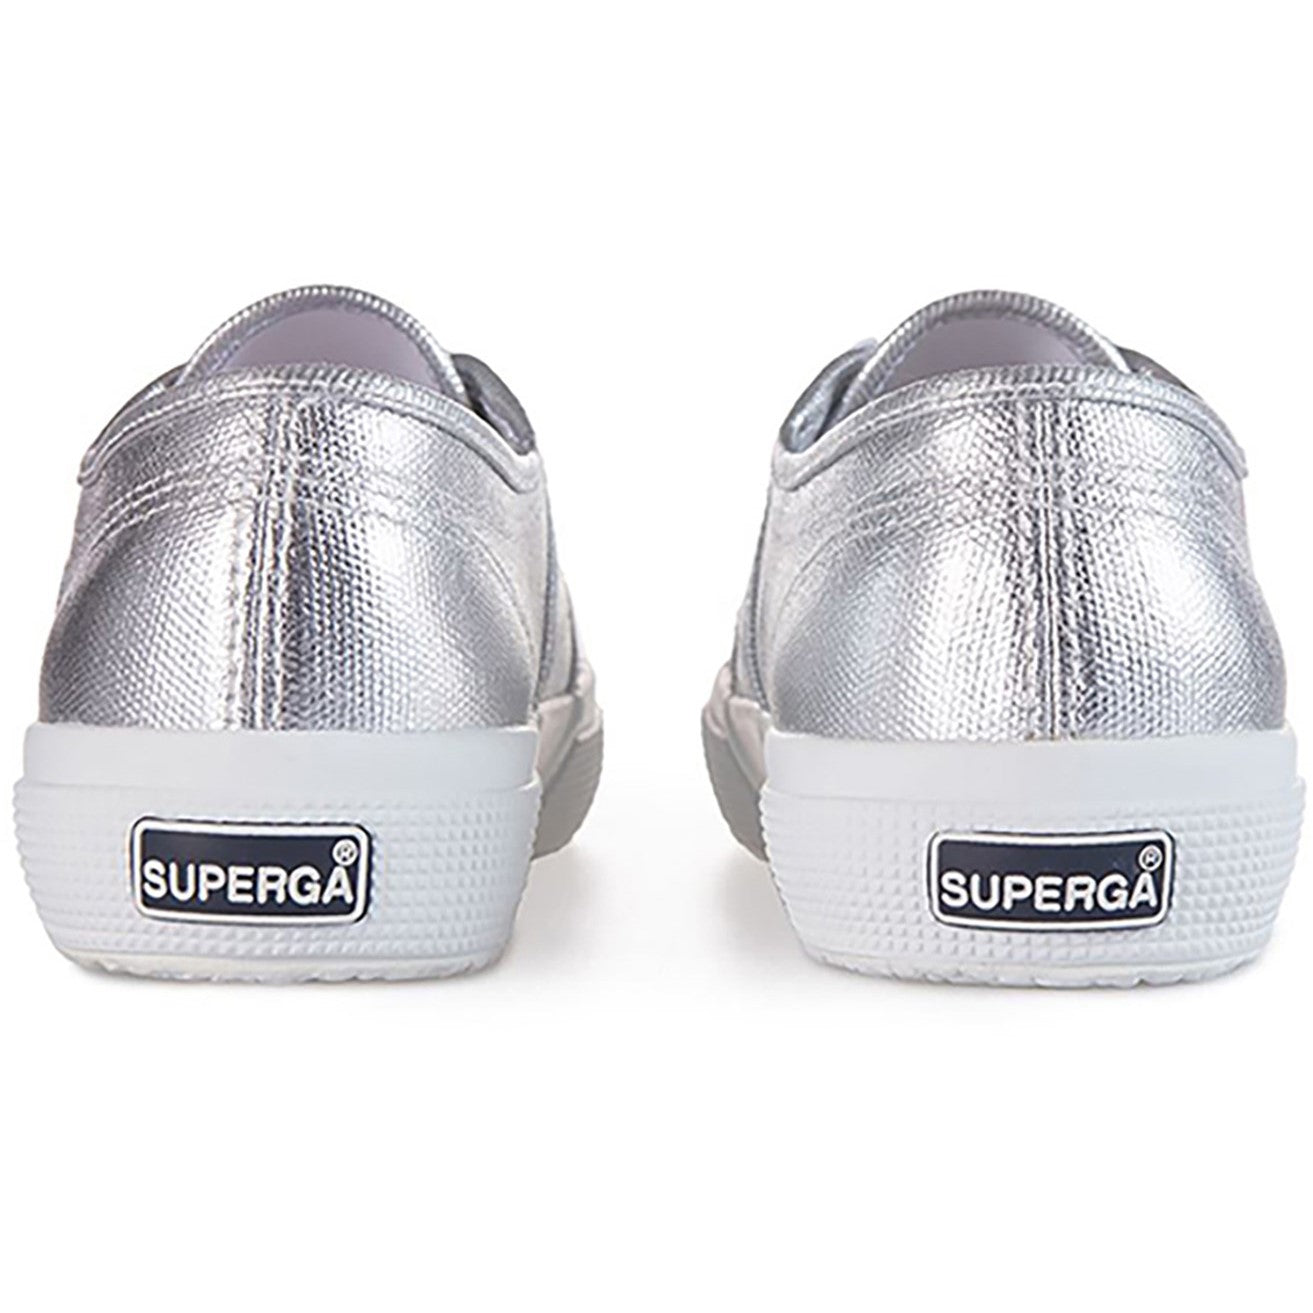 Superga Metallic Canvas Shoe 031GRY Grey Silver